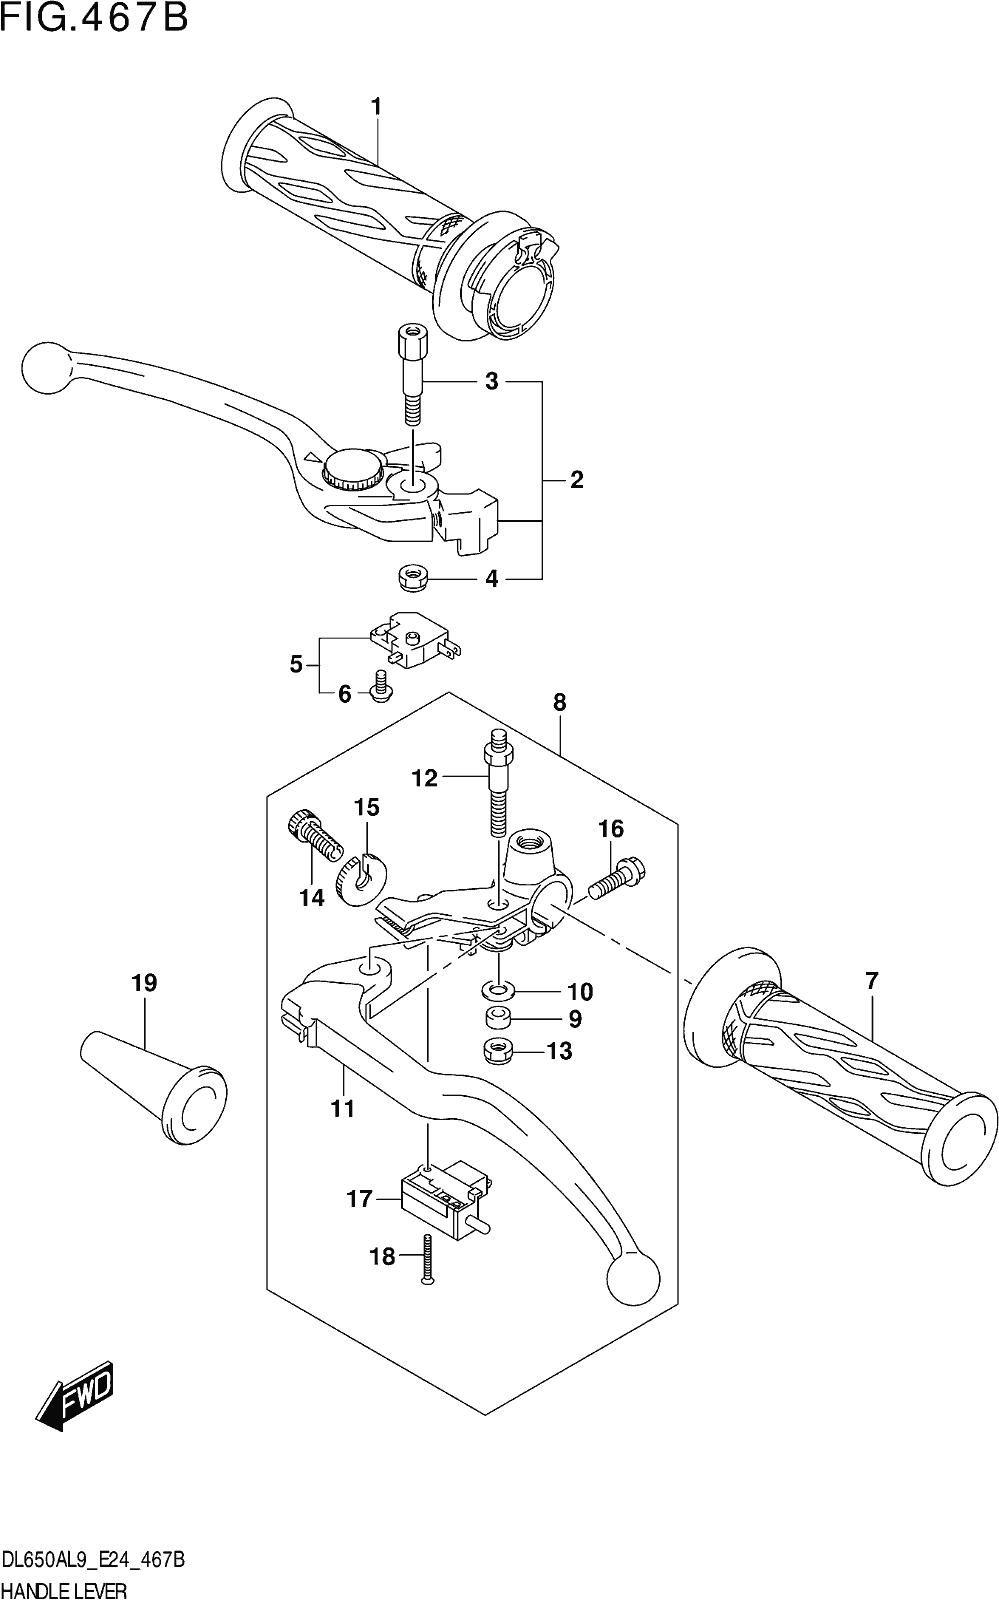 Fig.467b Handle Lever (dl650xa,dl650xaue)